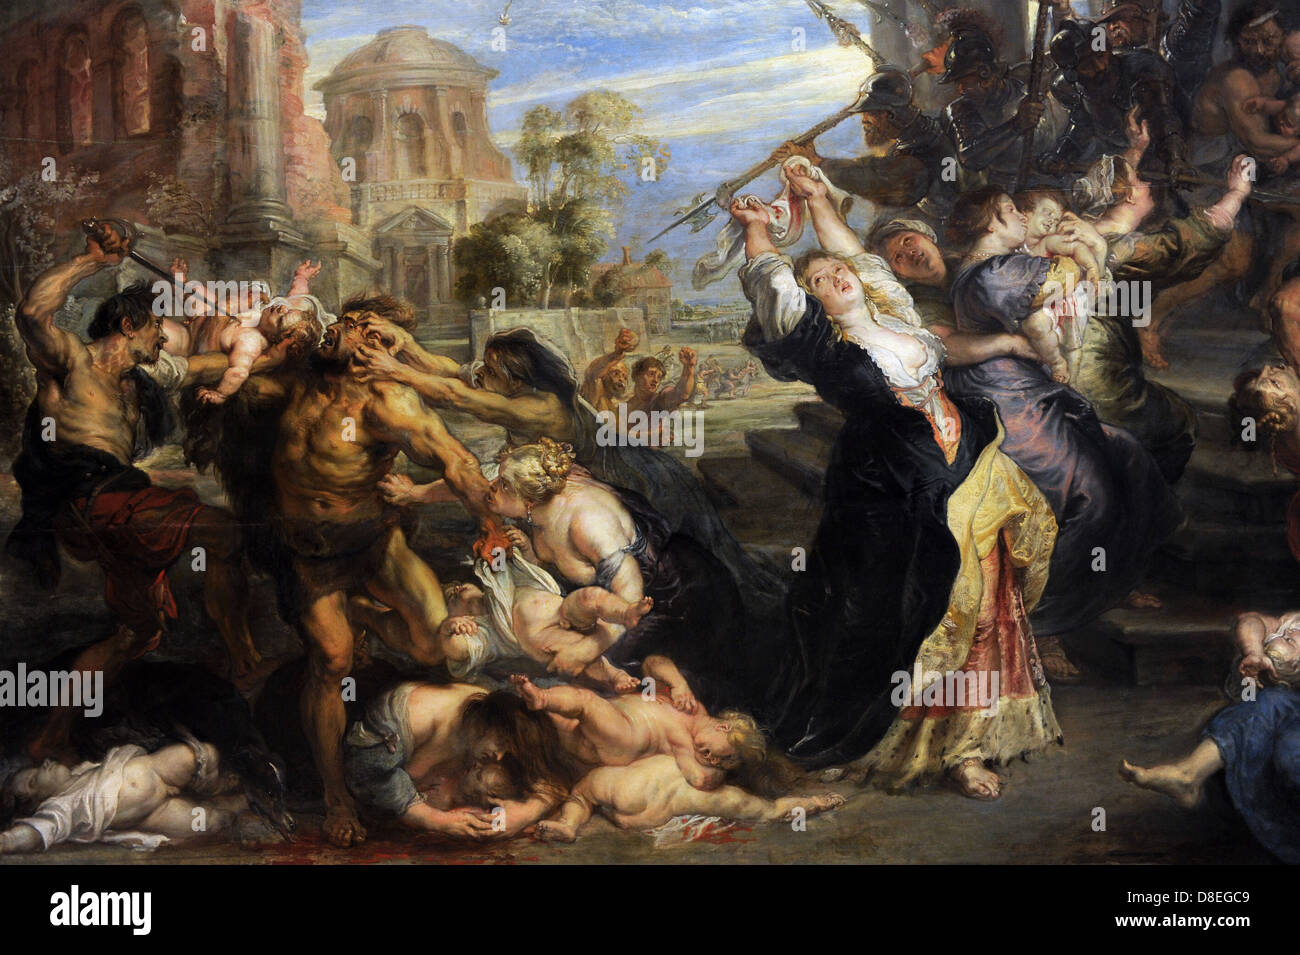 Peter Paul Rubens (1577-1640). German-born Flemish Baroque painter. Massacre of the Innocents, 1635-40. Detail. Stock Photo